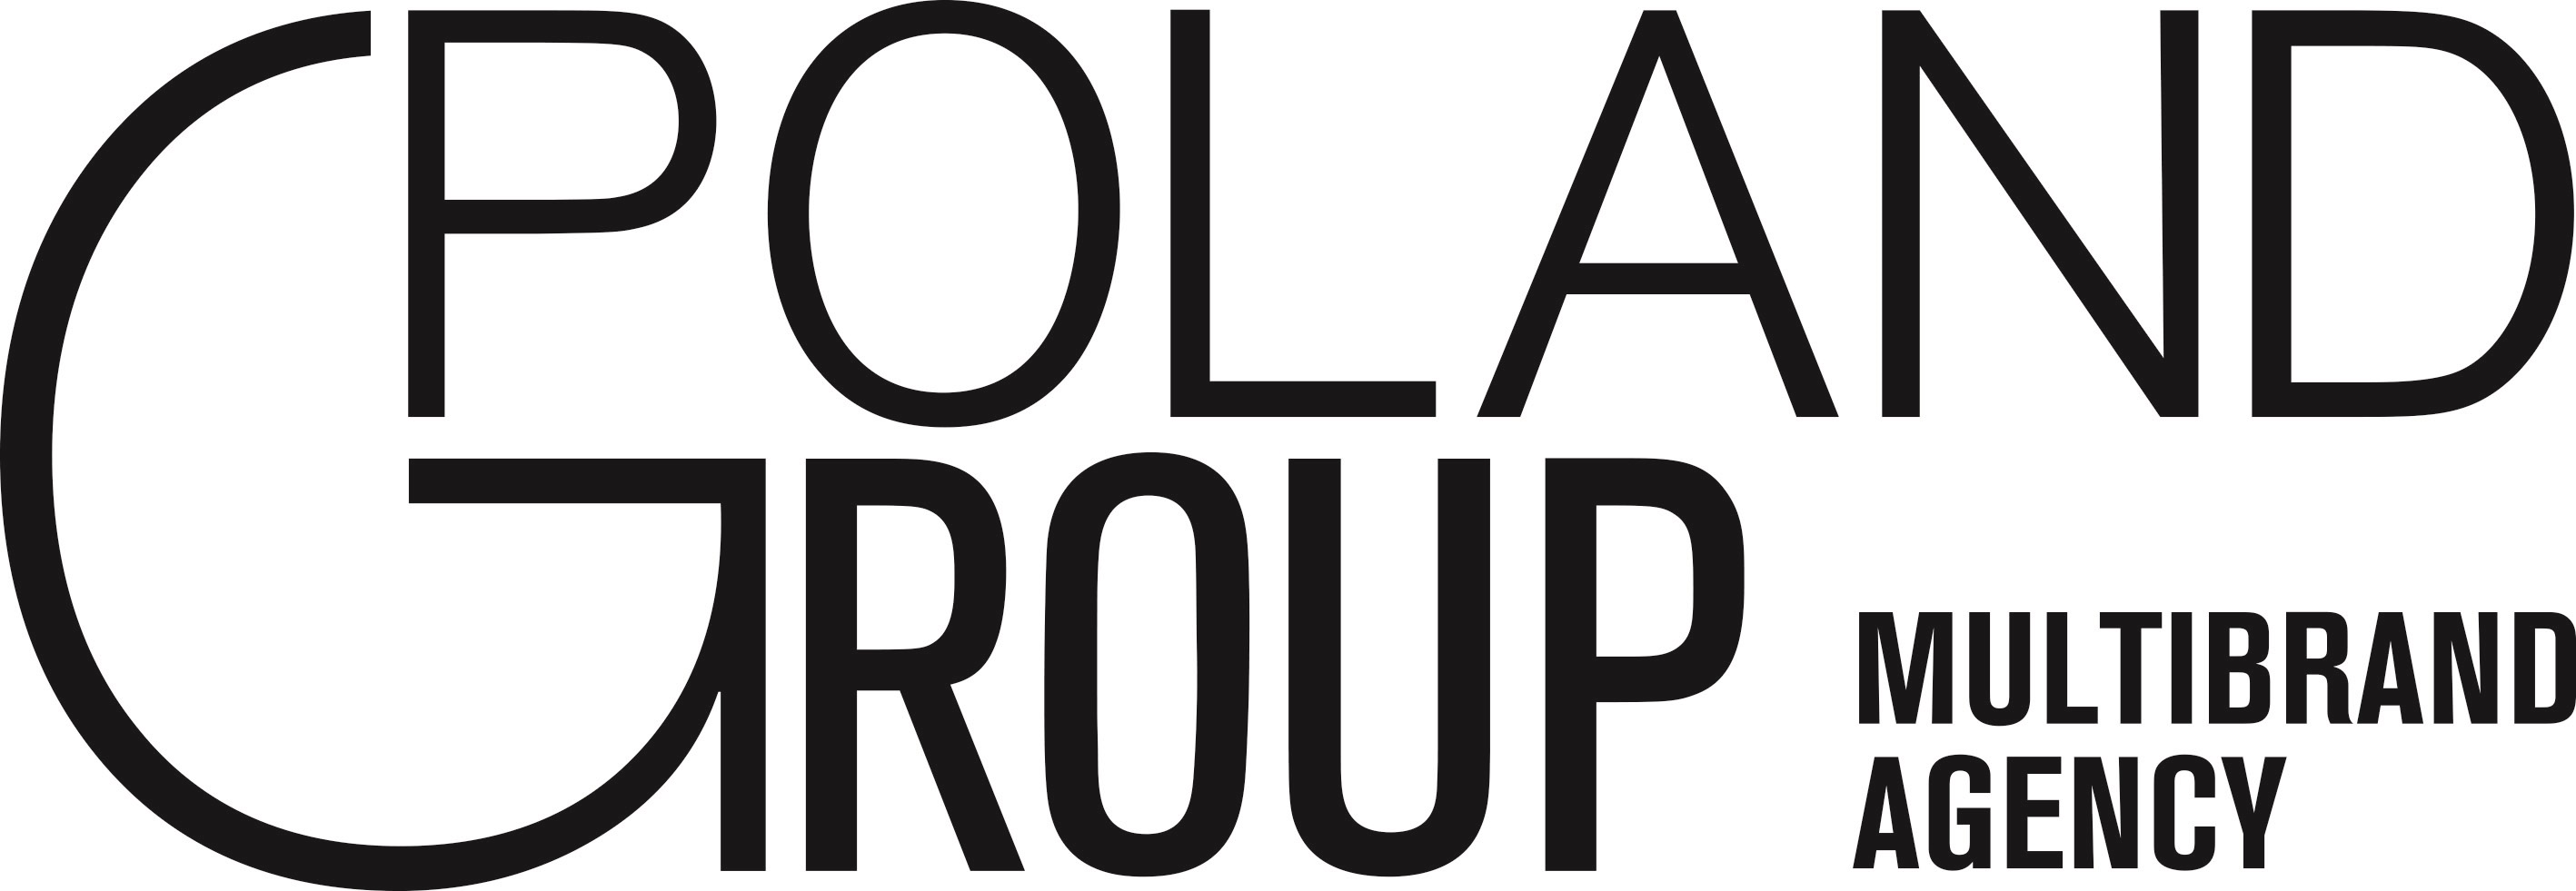 GPoland Group